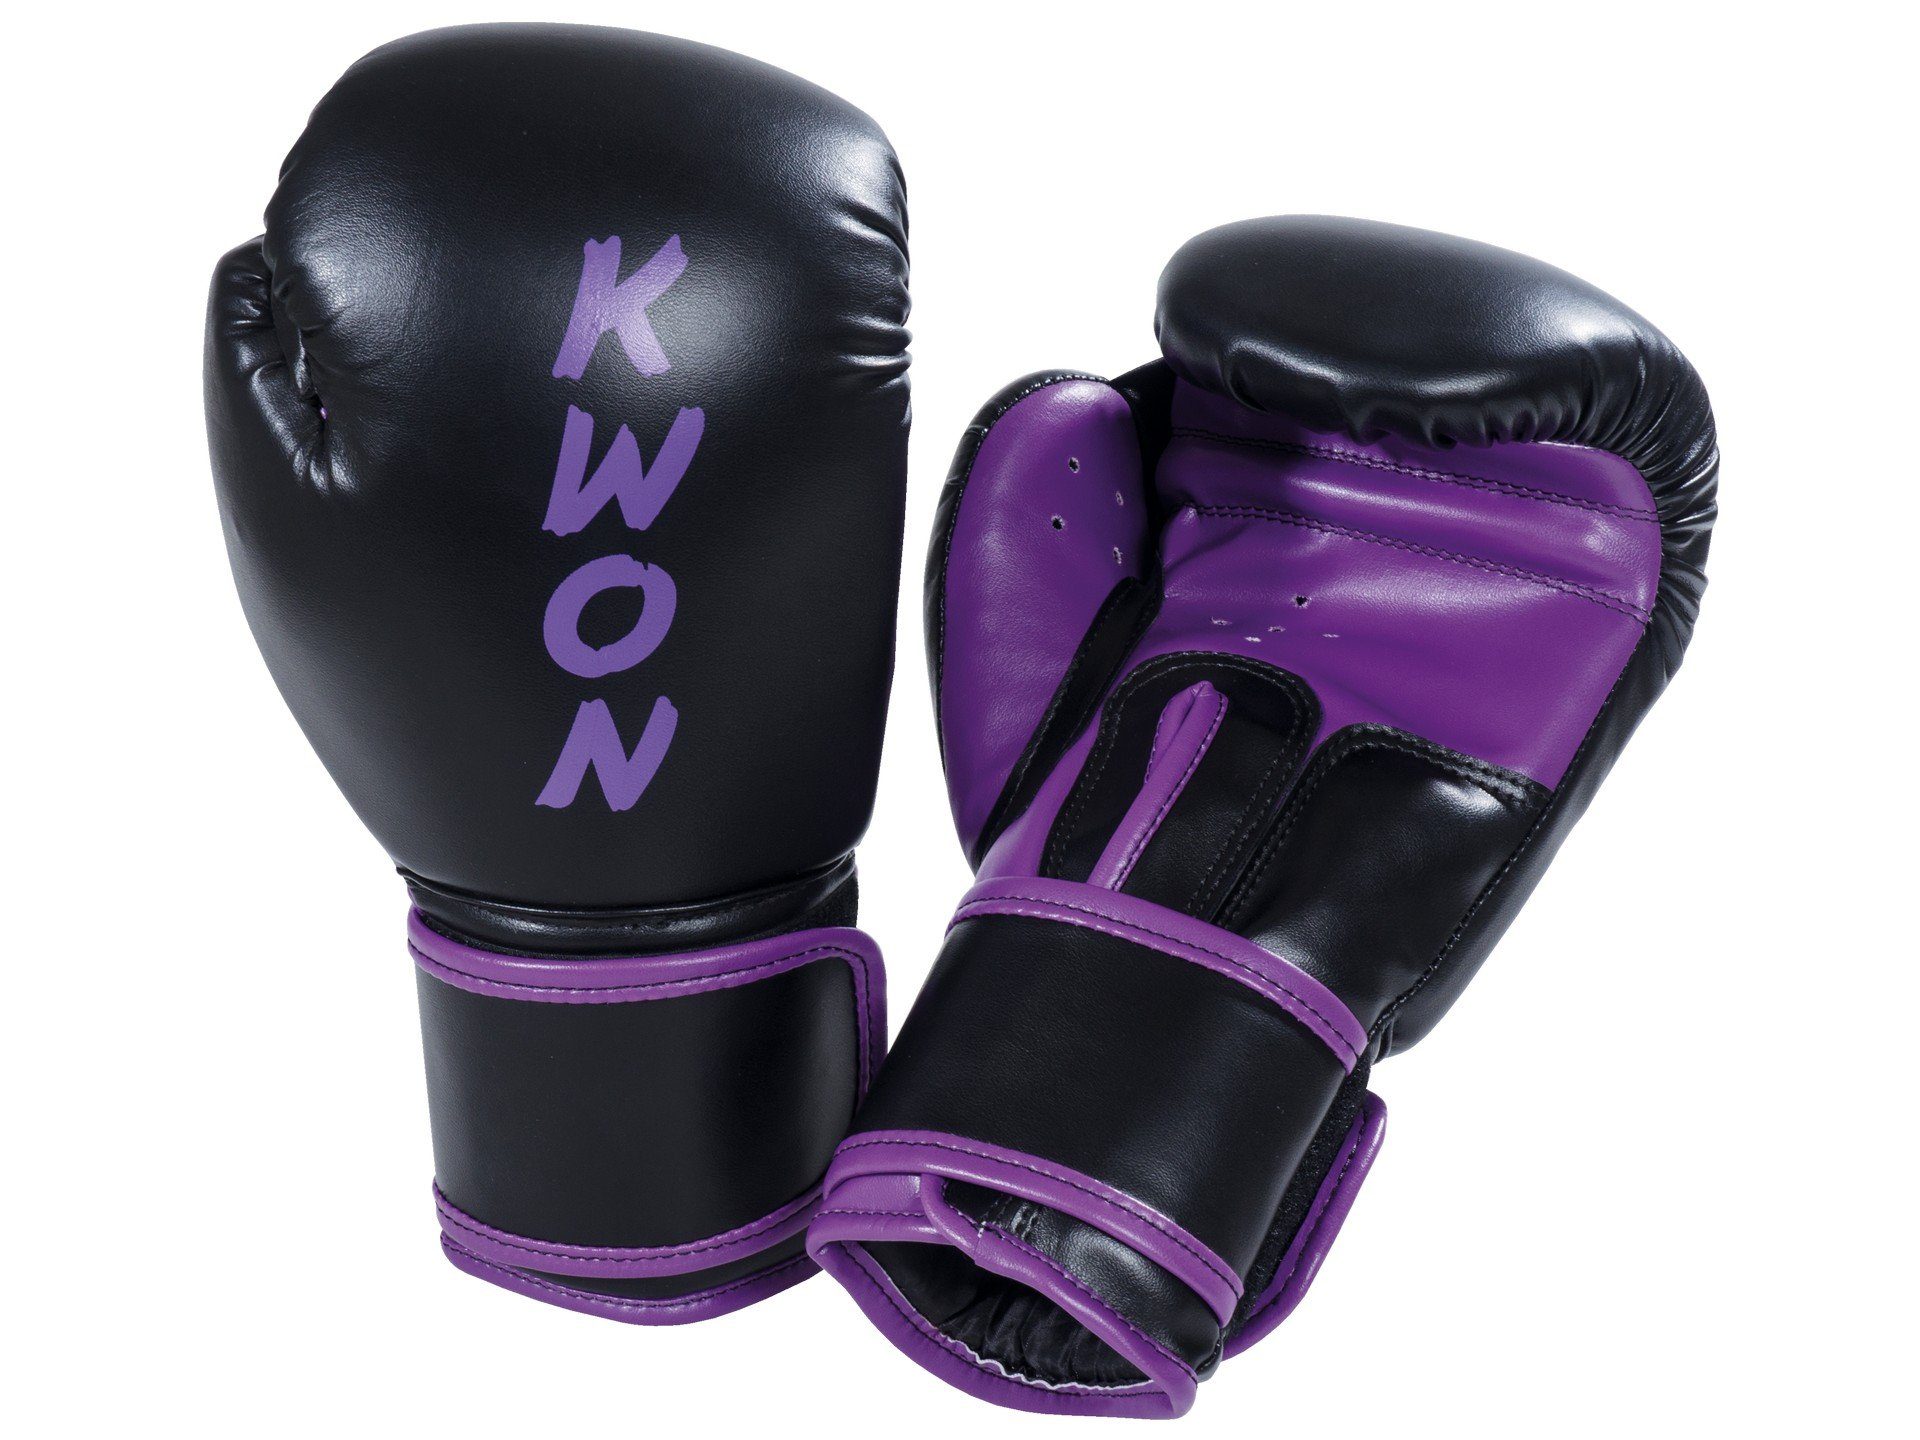 KWON - Einsteiger, Wettkampf 10 Training Box-Handschuhe Kickboxen Boxhandschuhe Boxen und (Paar), 8 Fortgeschrittene MMA Steko Unzen